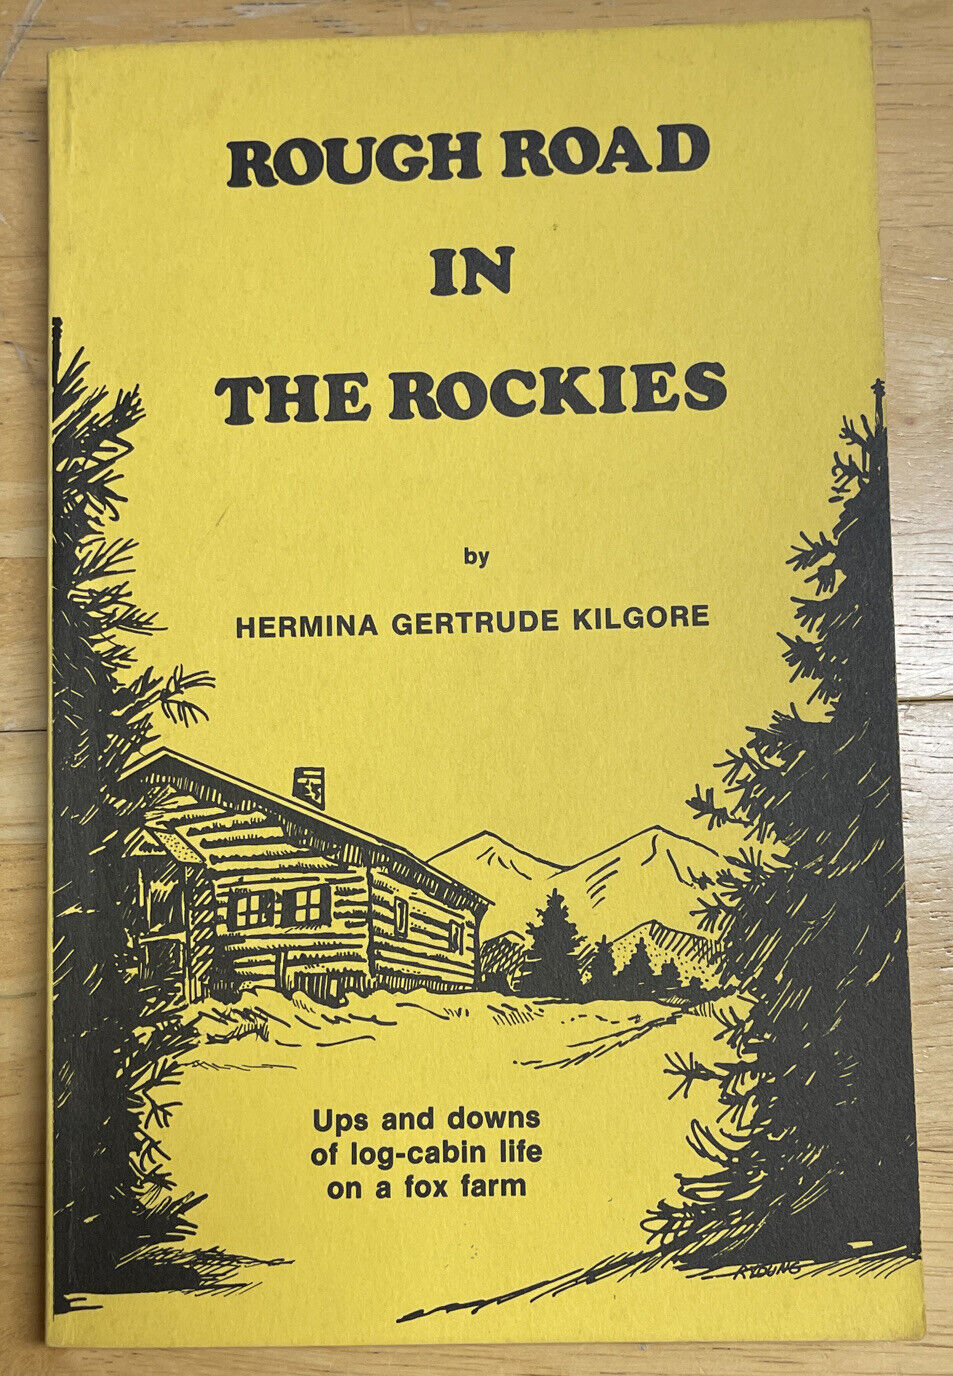 Rough Road in the Rockies 1975 Hermina Gertrude Kilgore log cabin life Colorado